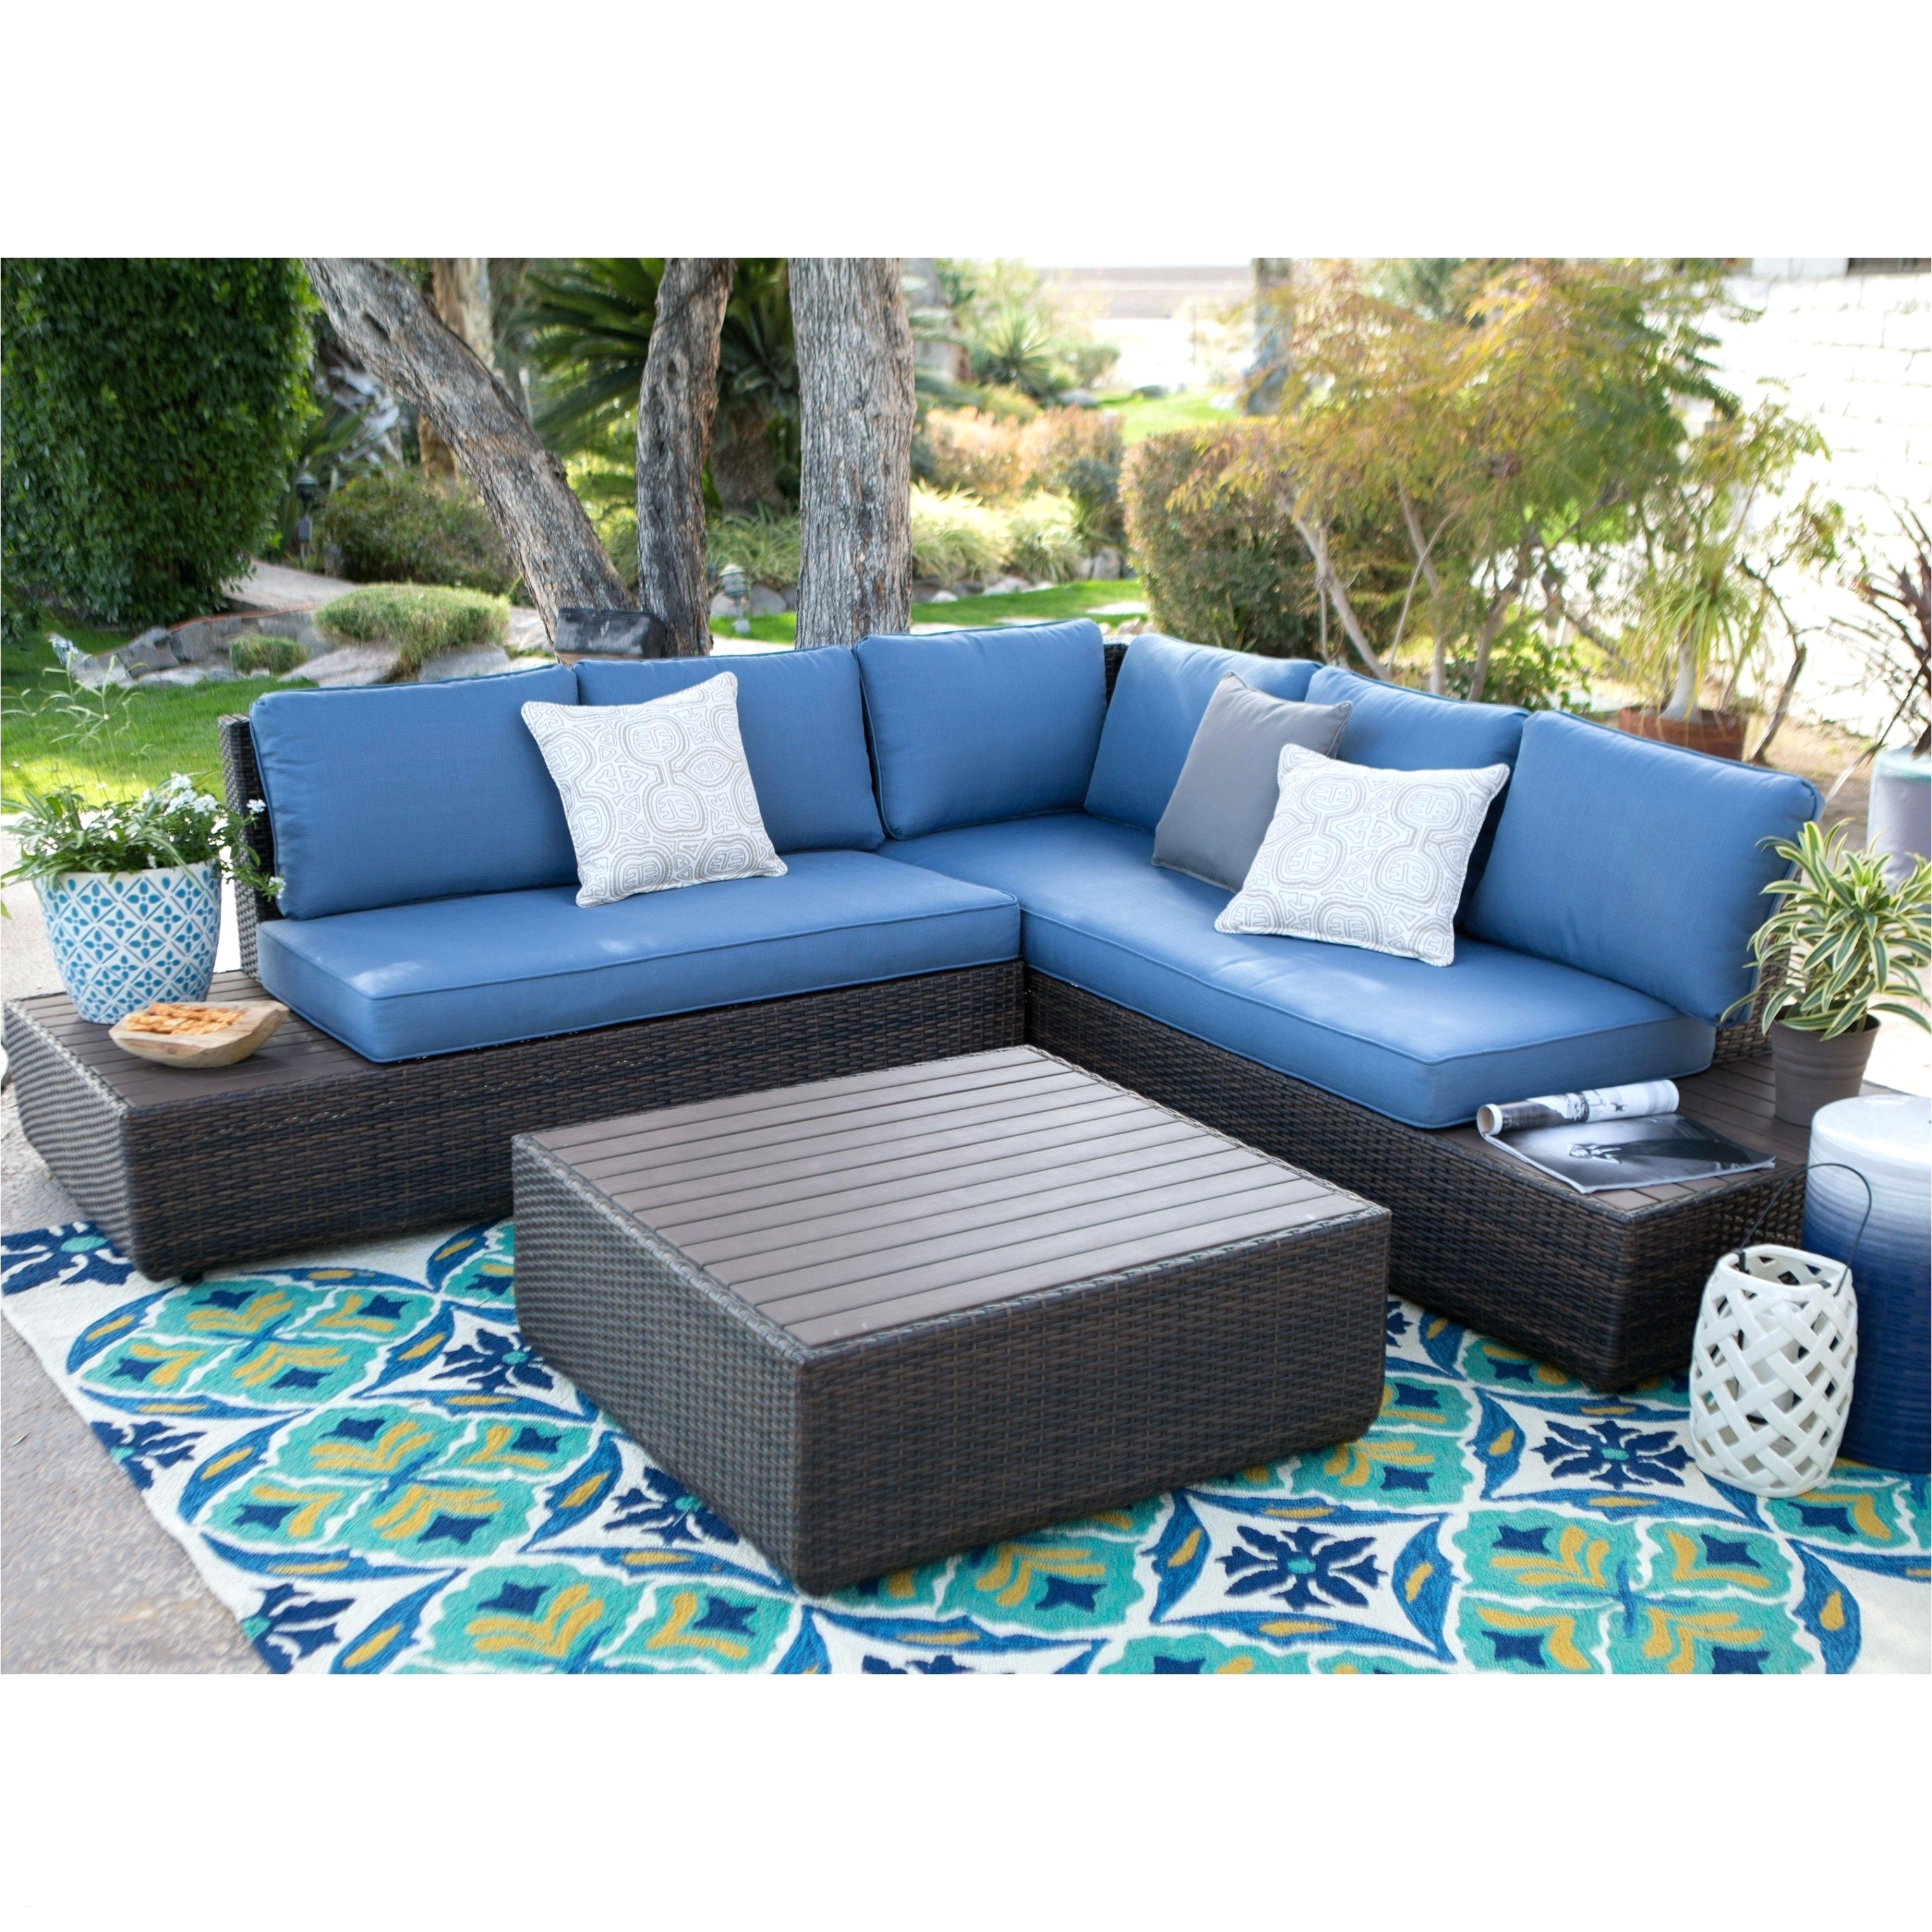 elegant wayfair sofa sets wayfair outdoor furniture awesome herrlich wicker outdoor sofa 0d